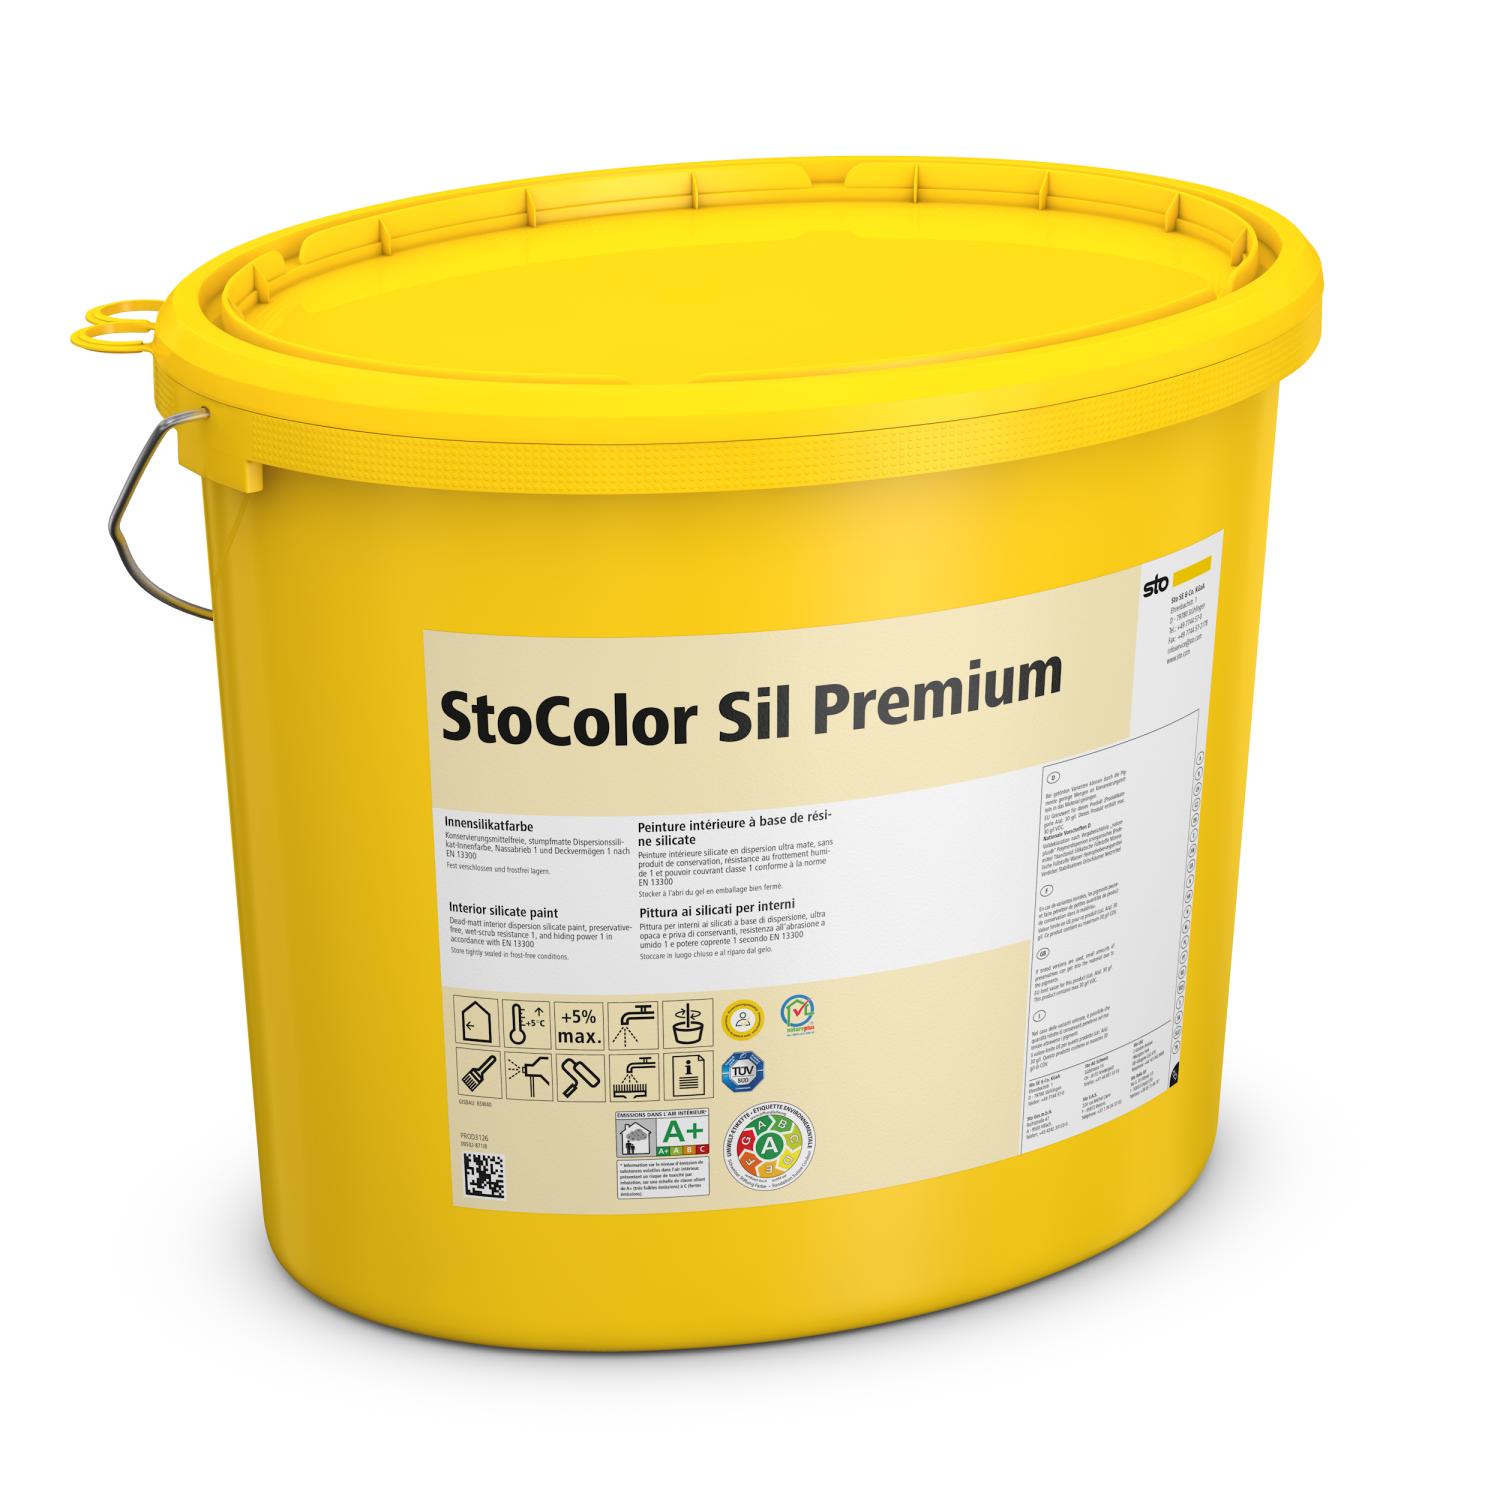 StoColor Sil Premium - getönt, 5 l Eimer